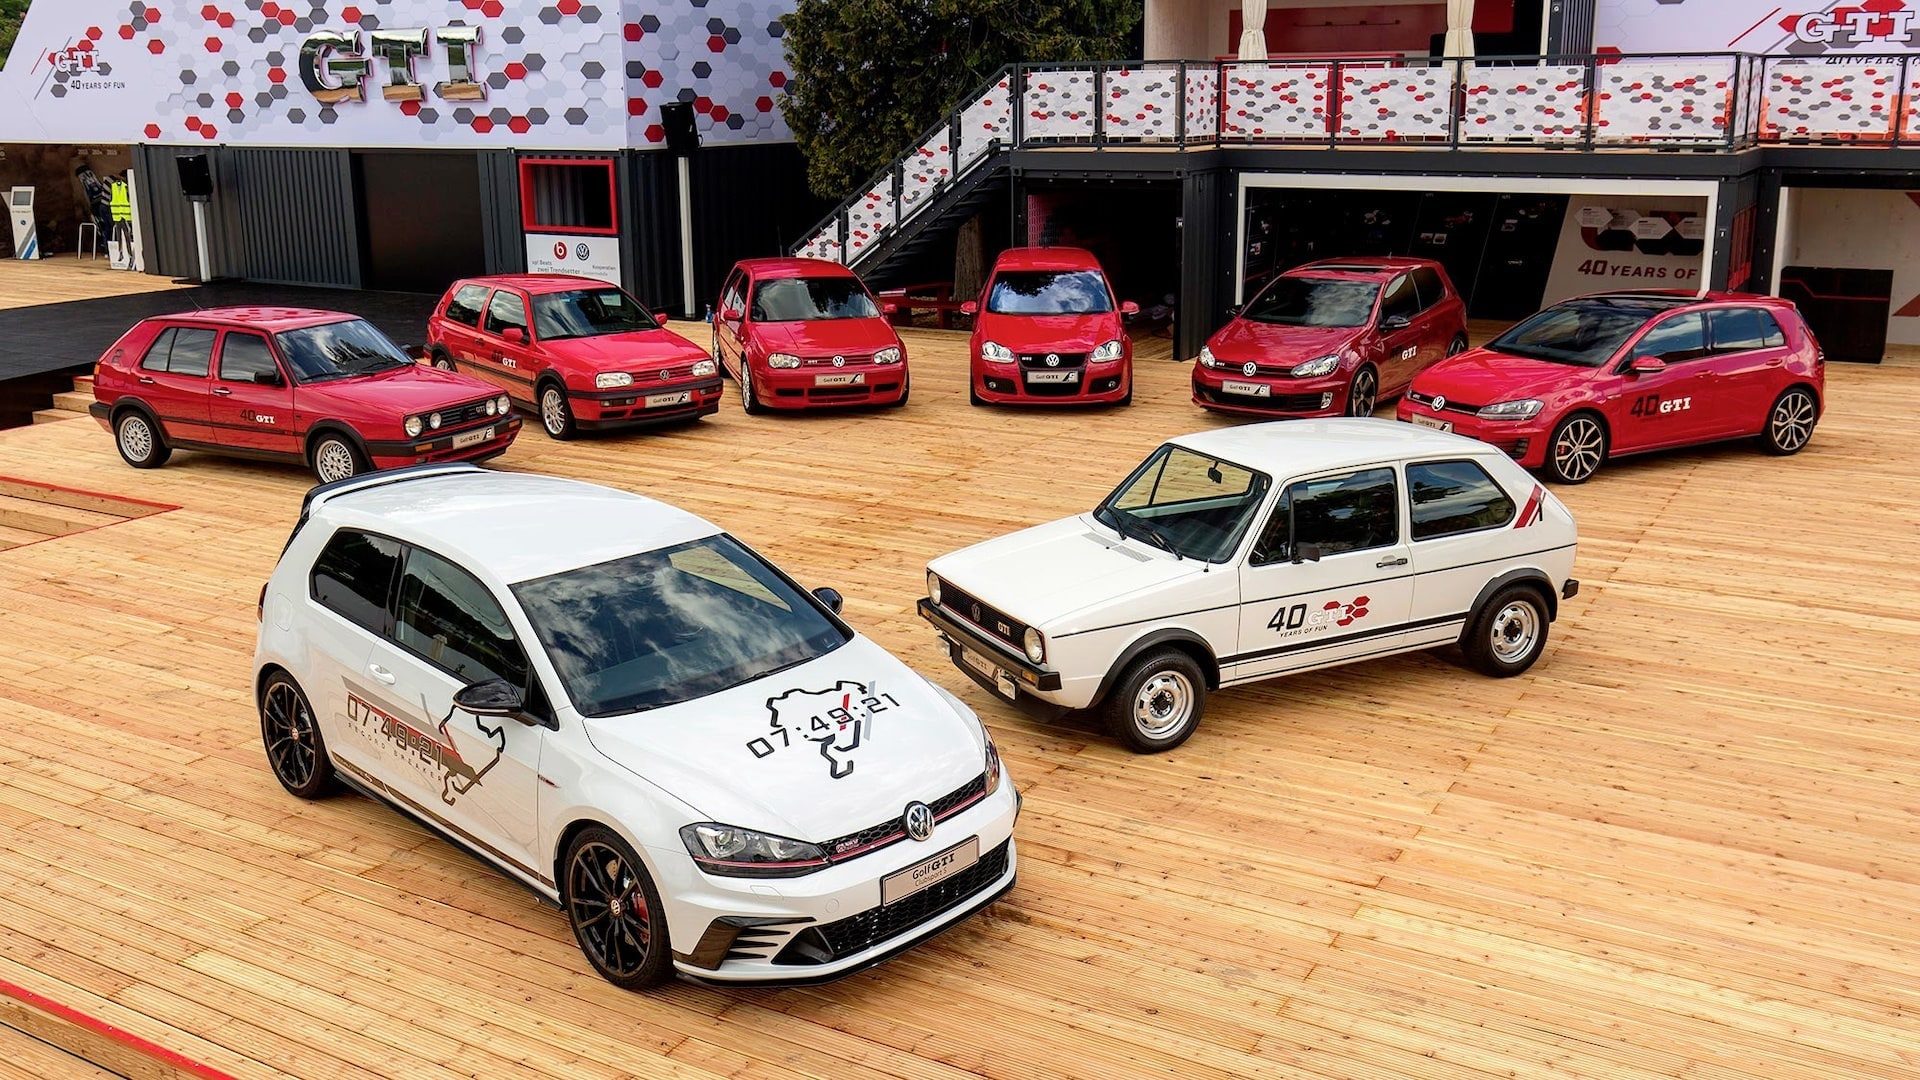 Volkswagen Homecoming GTI Festival